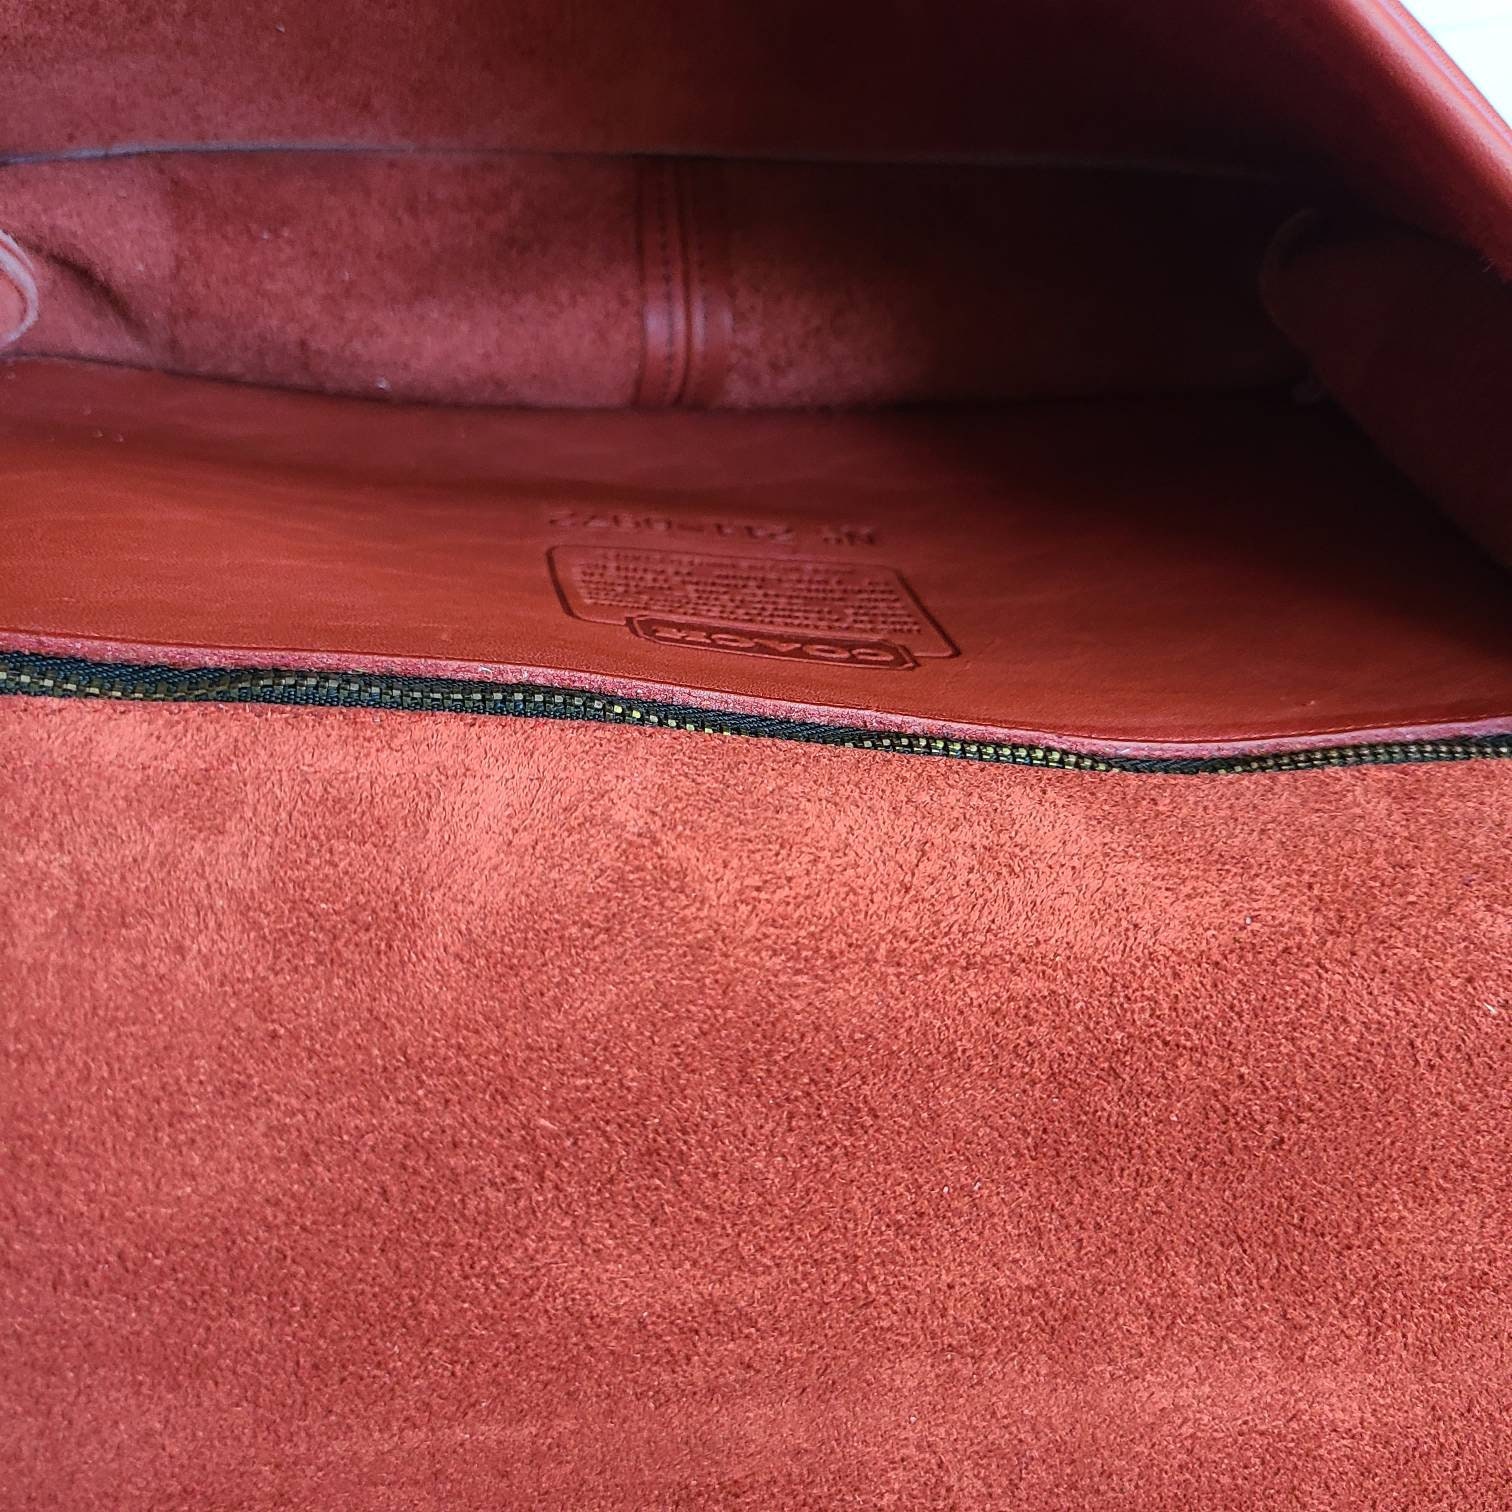 Vintage Coach Original Red Convertible Clutch Shoulder Bag | Etsy